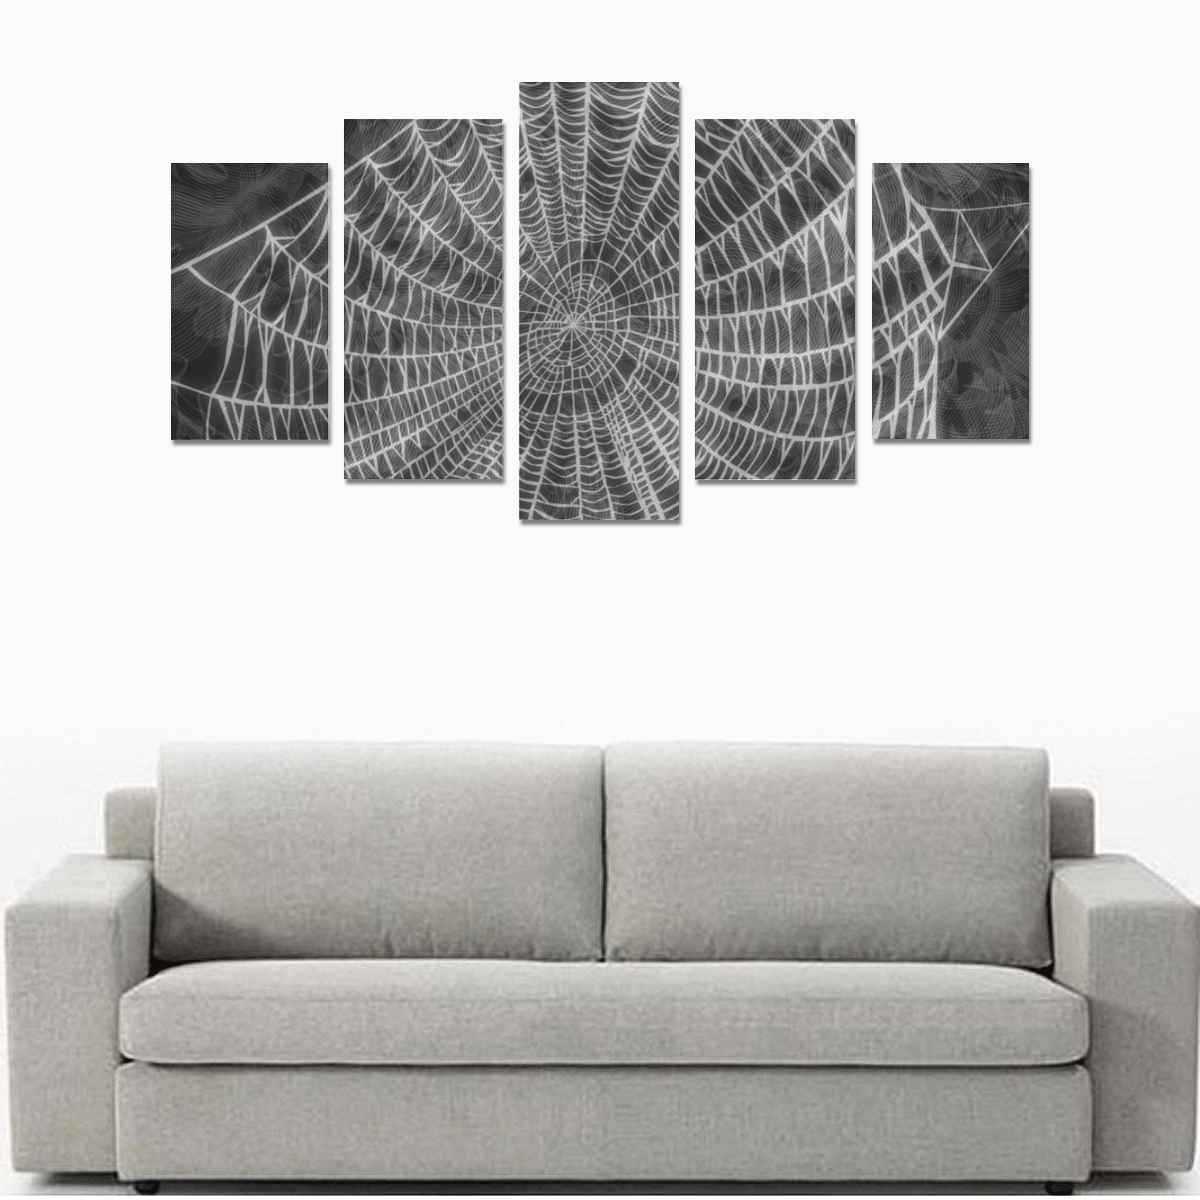 Spiderweb Damask Gothic Art Canvas Print Sets A (No Frame)